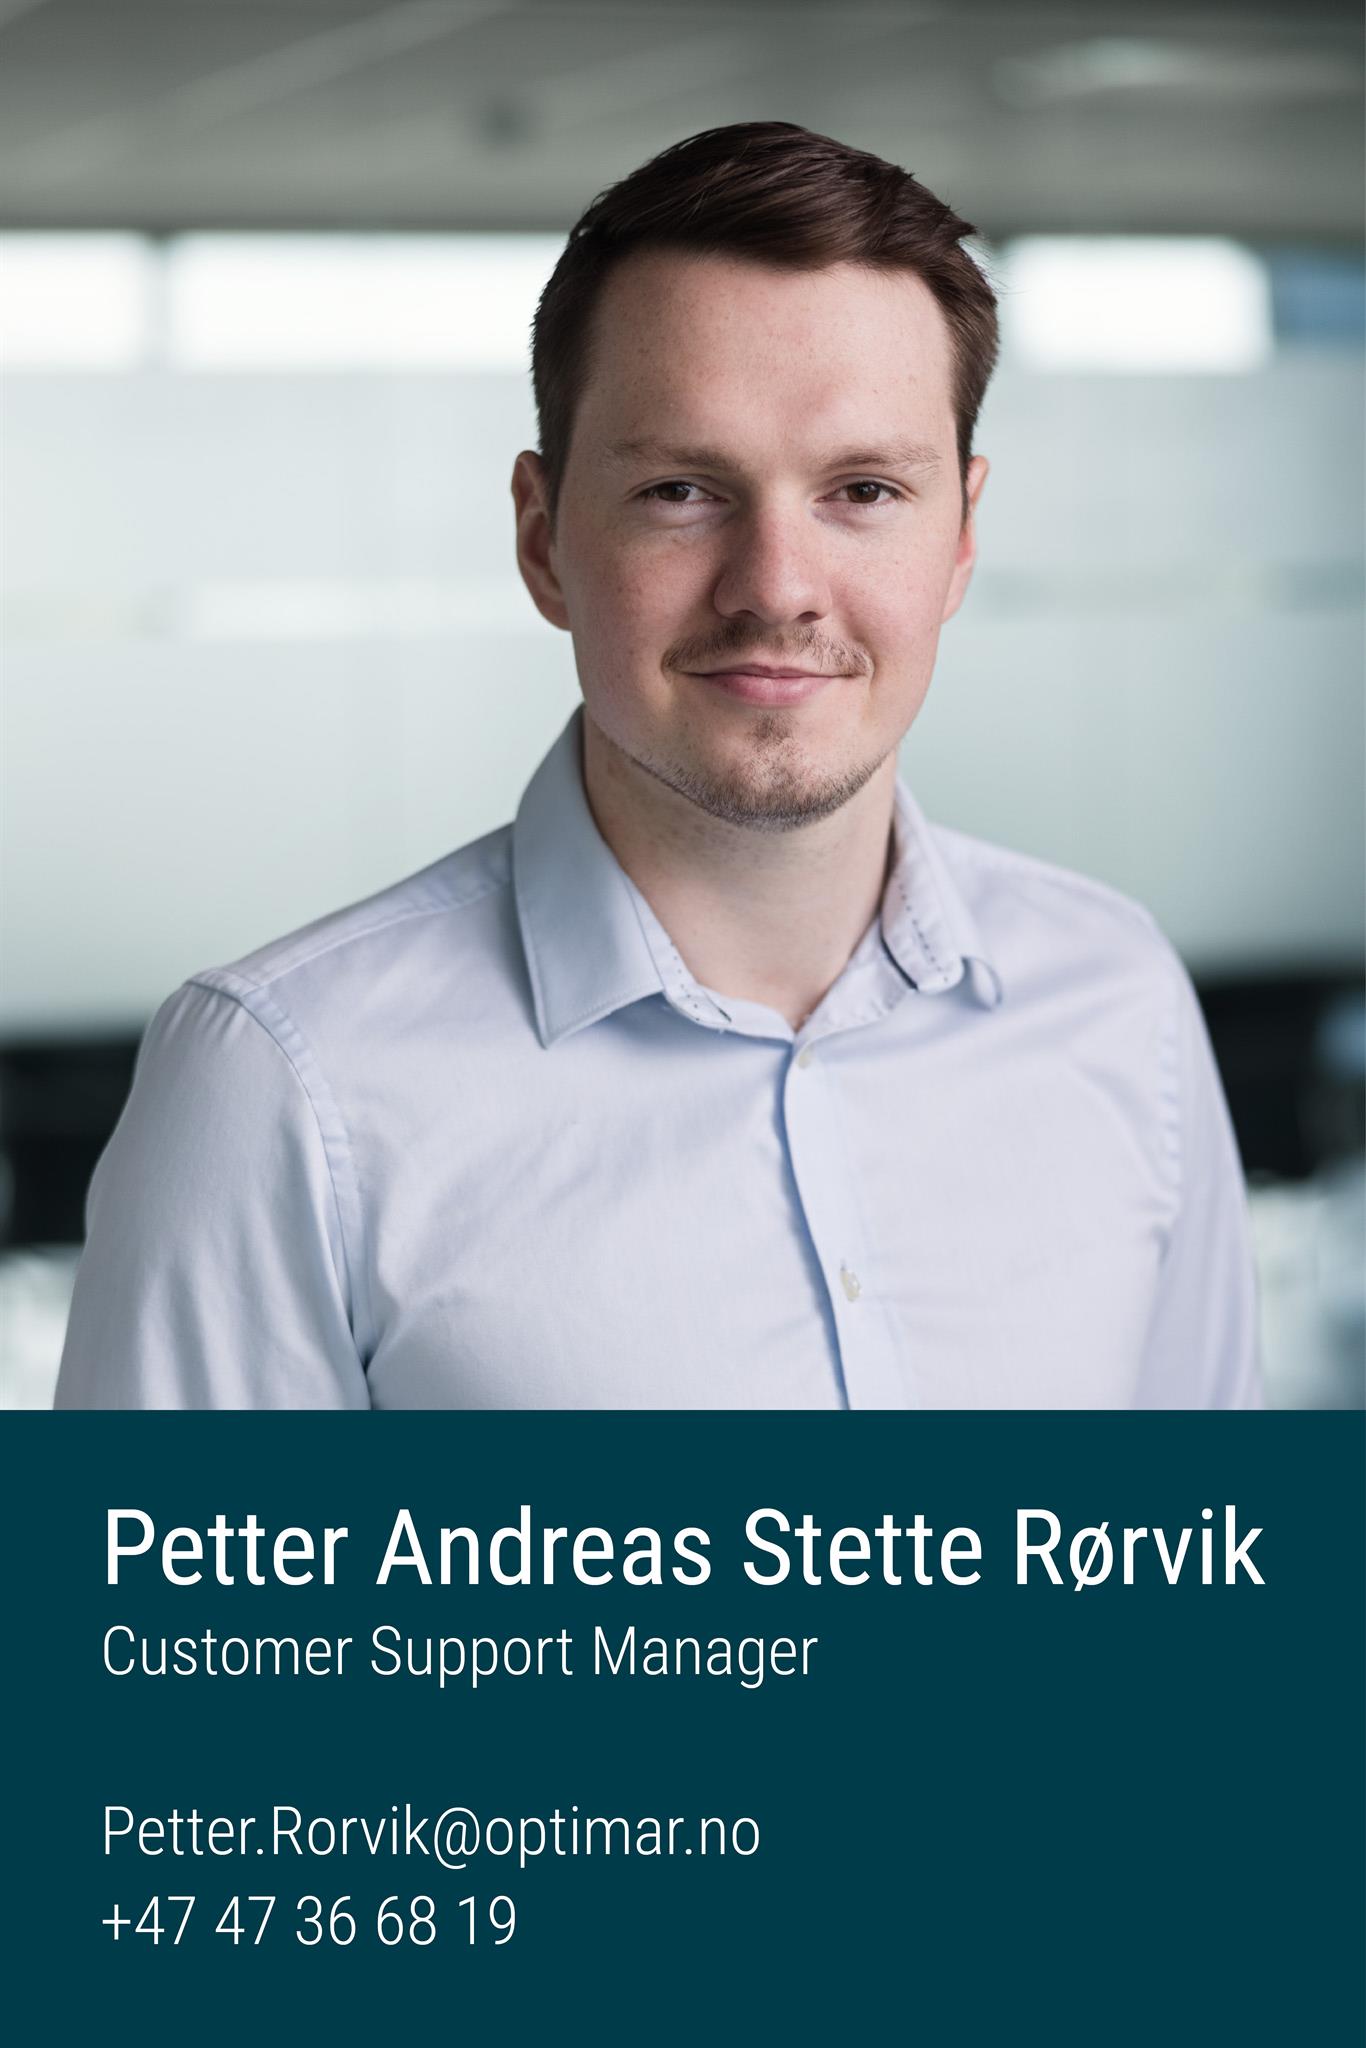 Petter Andreas Stette Rørvik